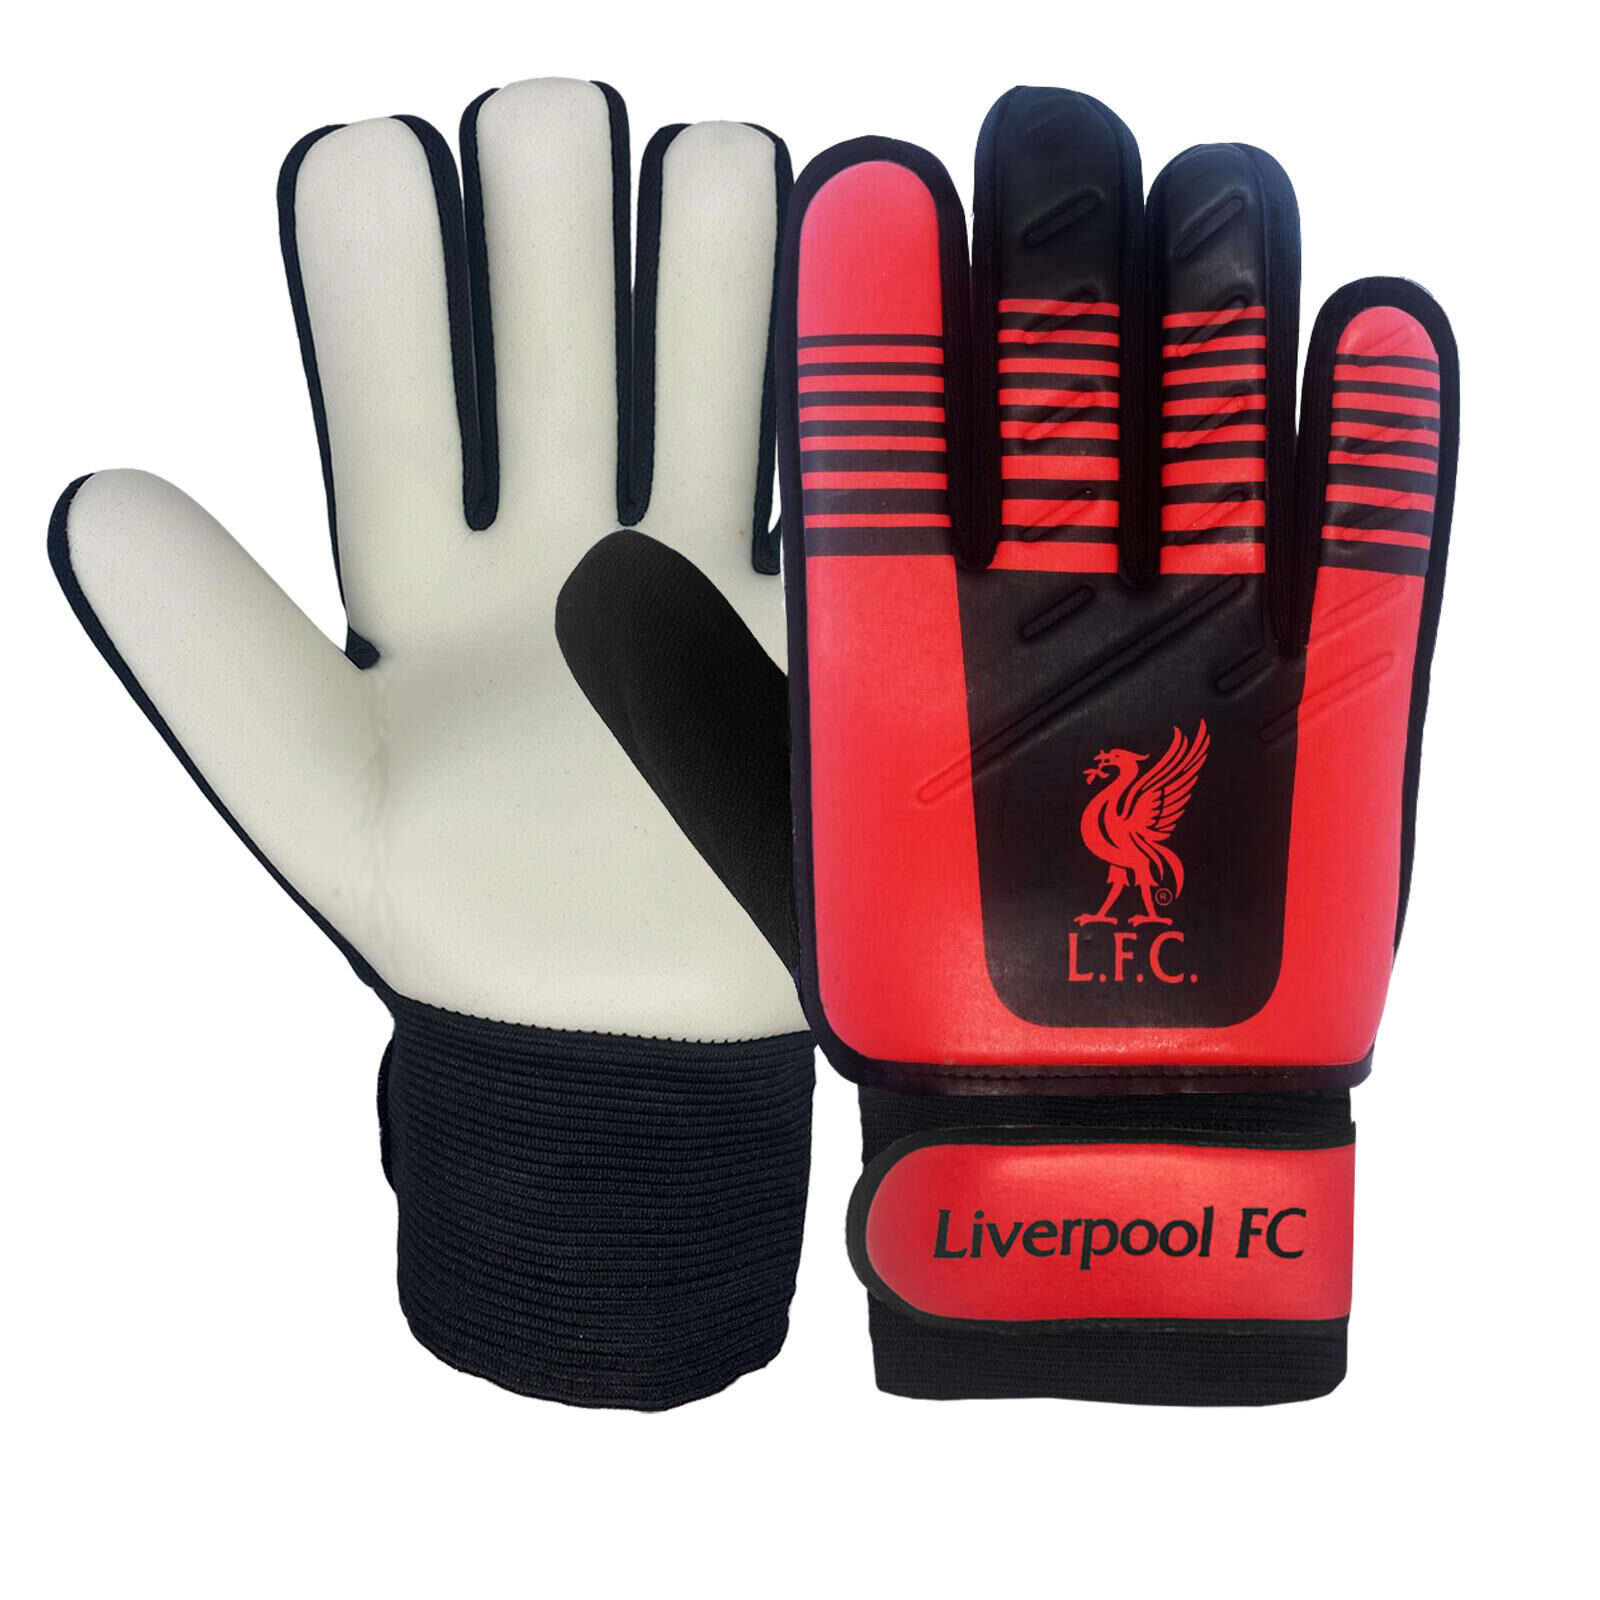 LIVERPOOL FC Liverpool FC Boys Gloves Goalie Goalkeeper Kids Youths OFFICIAL Football Gift